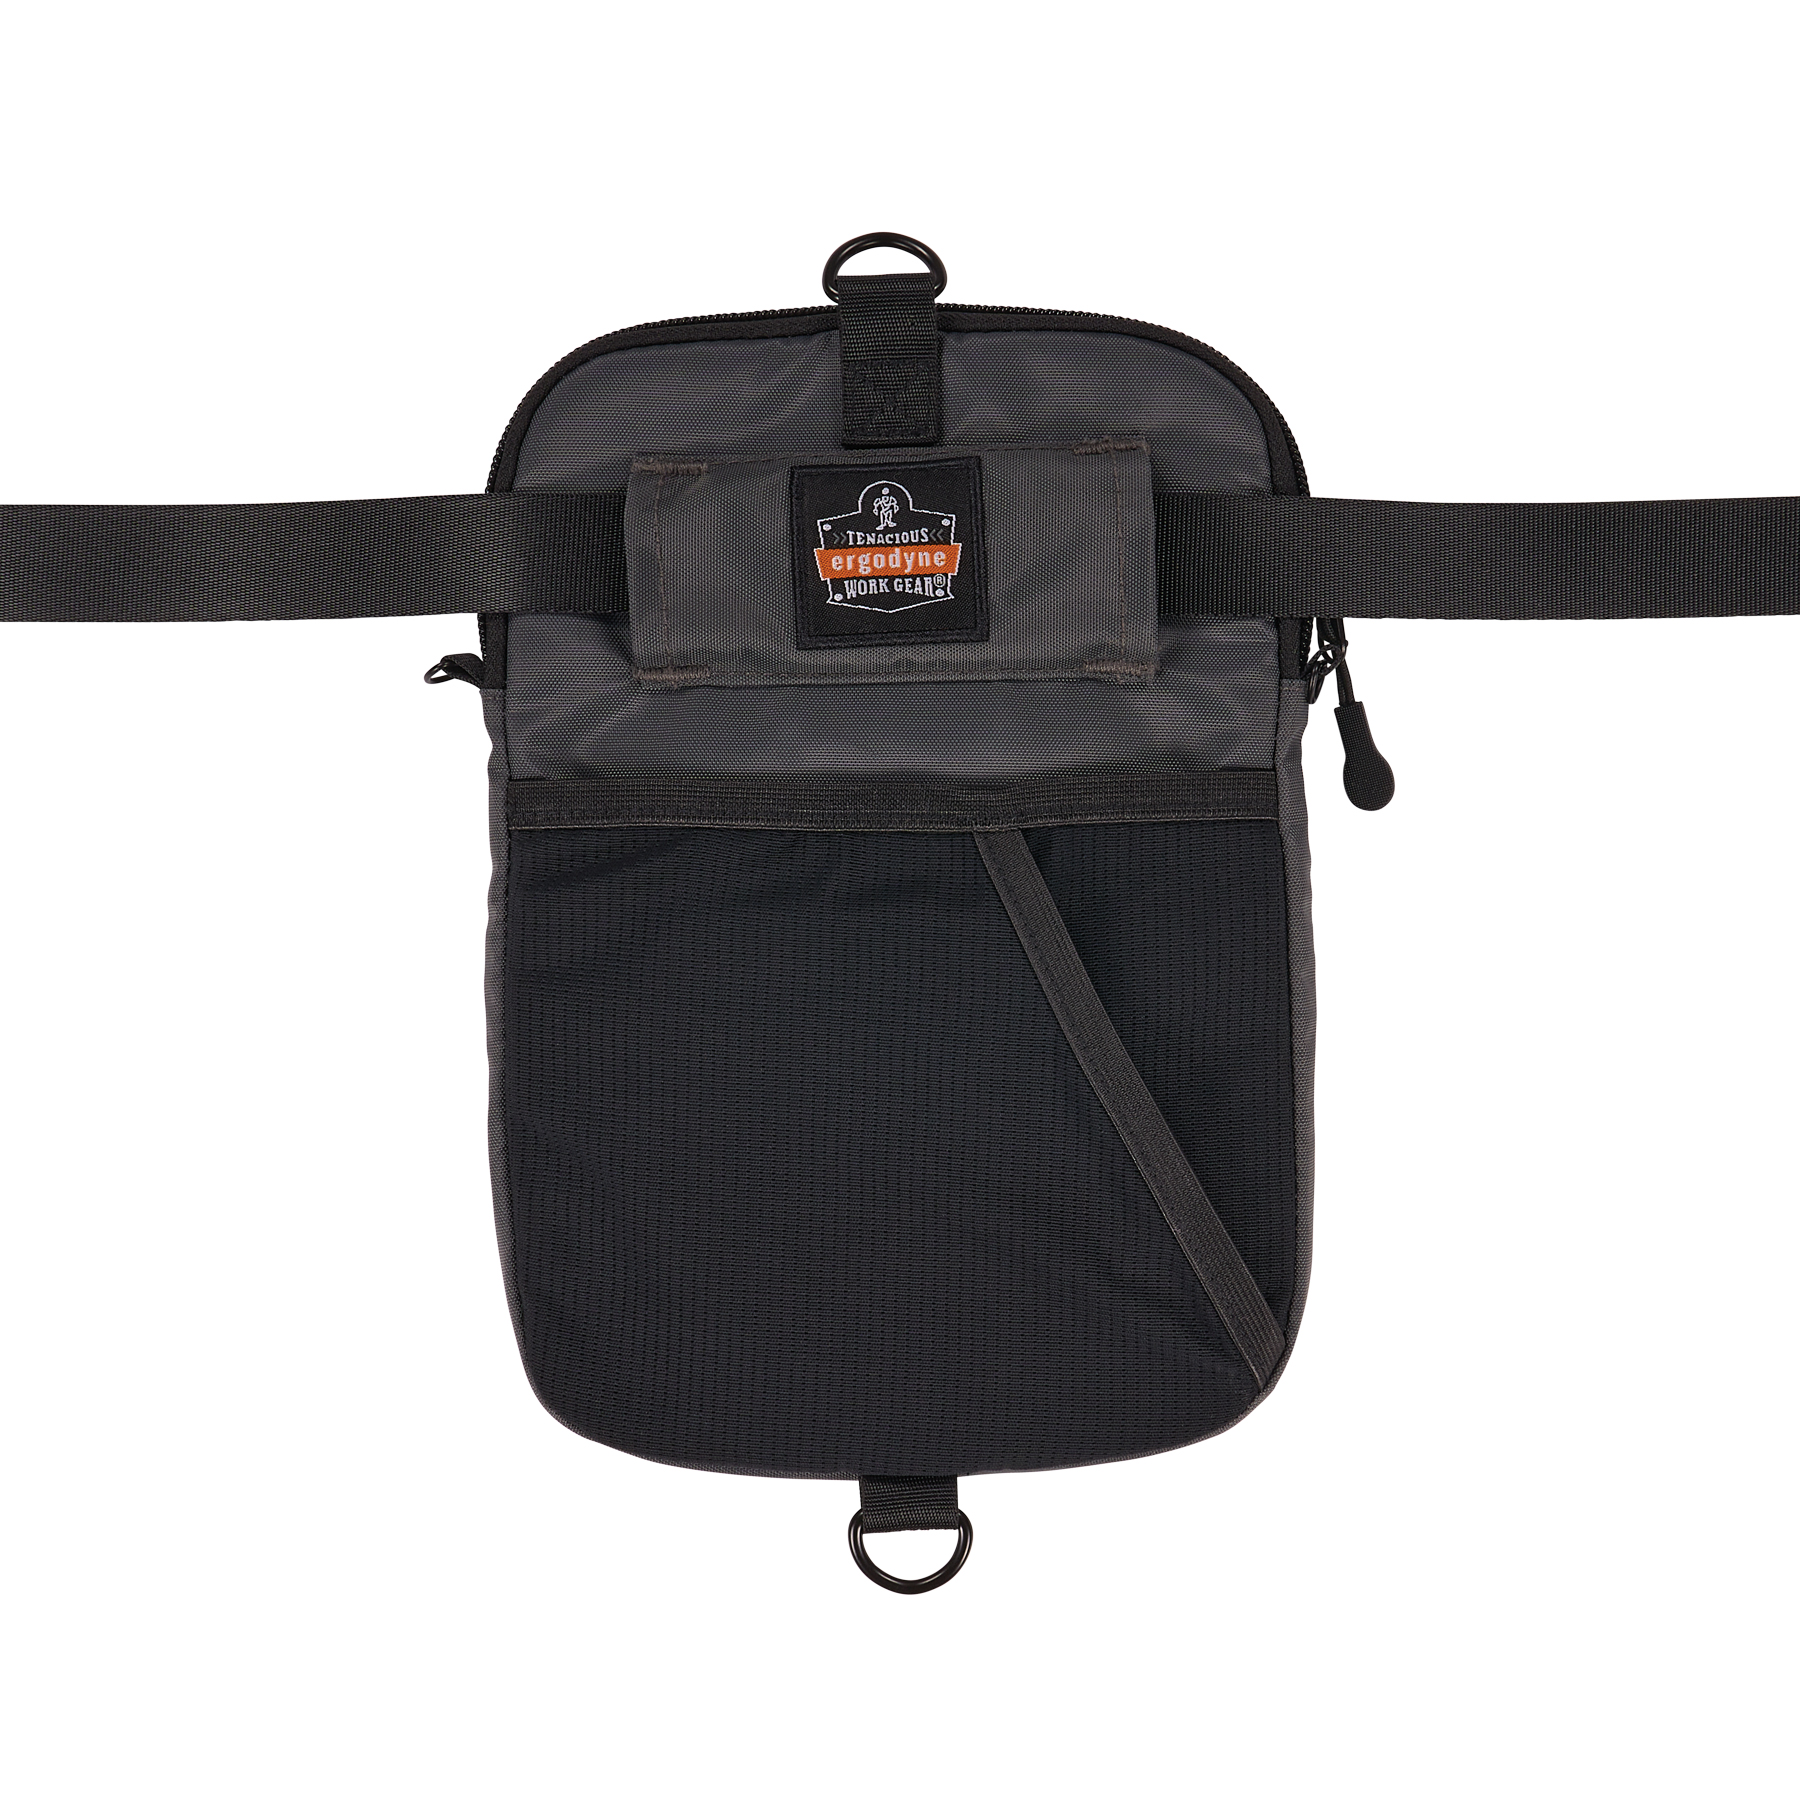 Personalised Reflective Belt Bag Bum Bag